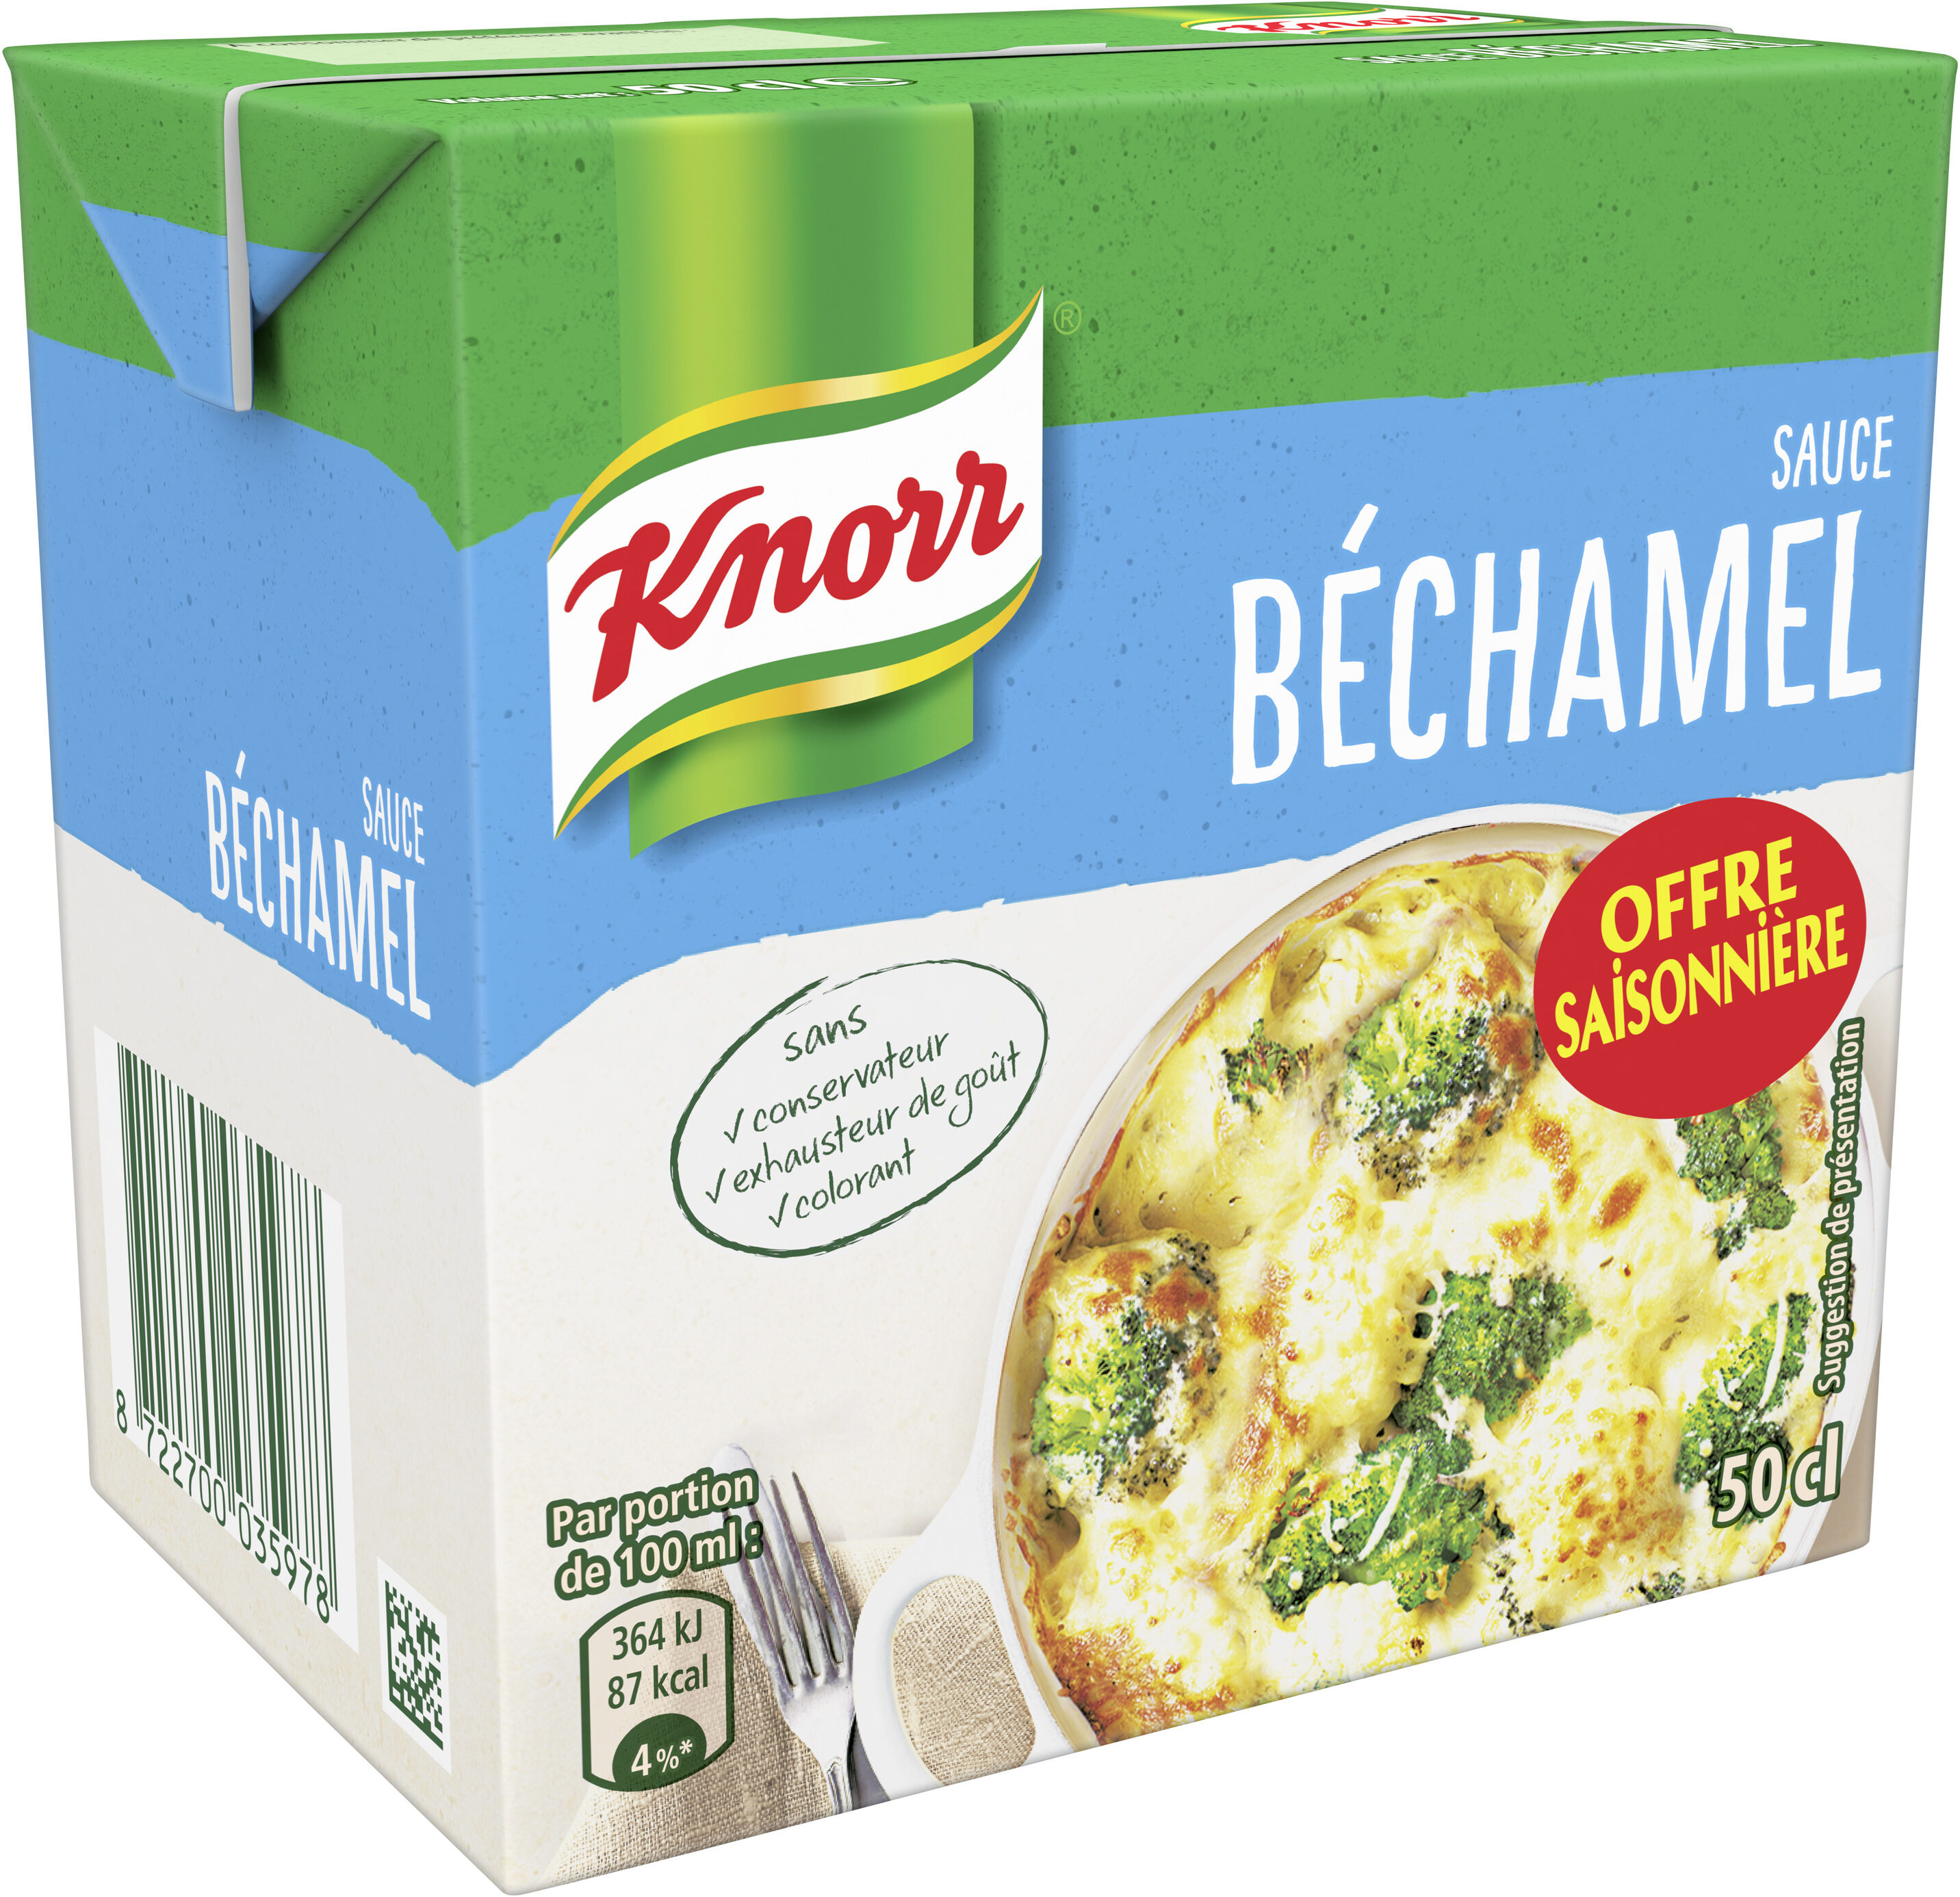 Knorr sce becham 500ml os - Produit